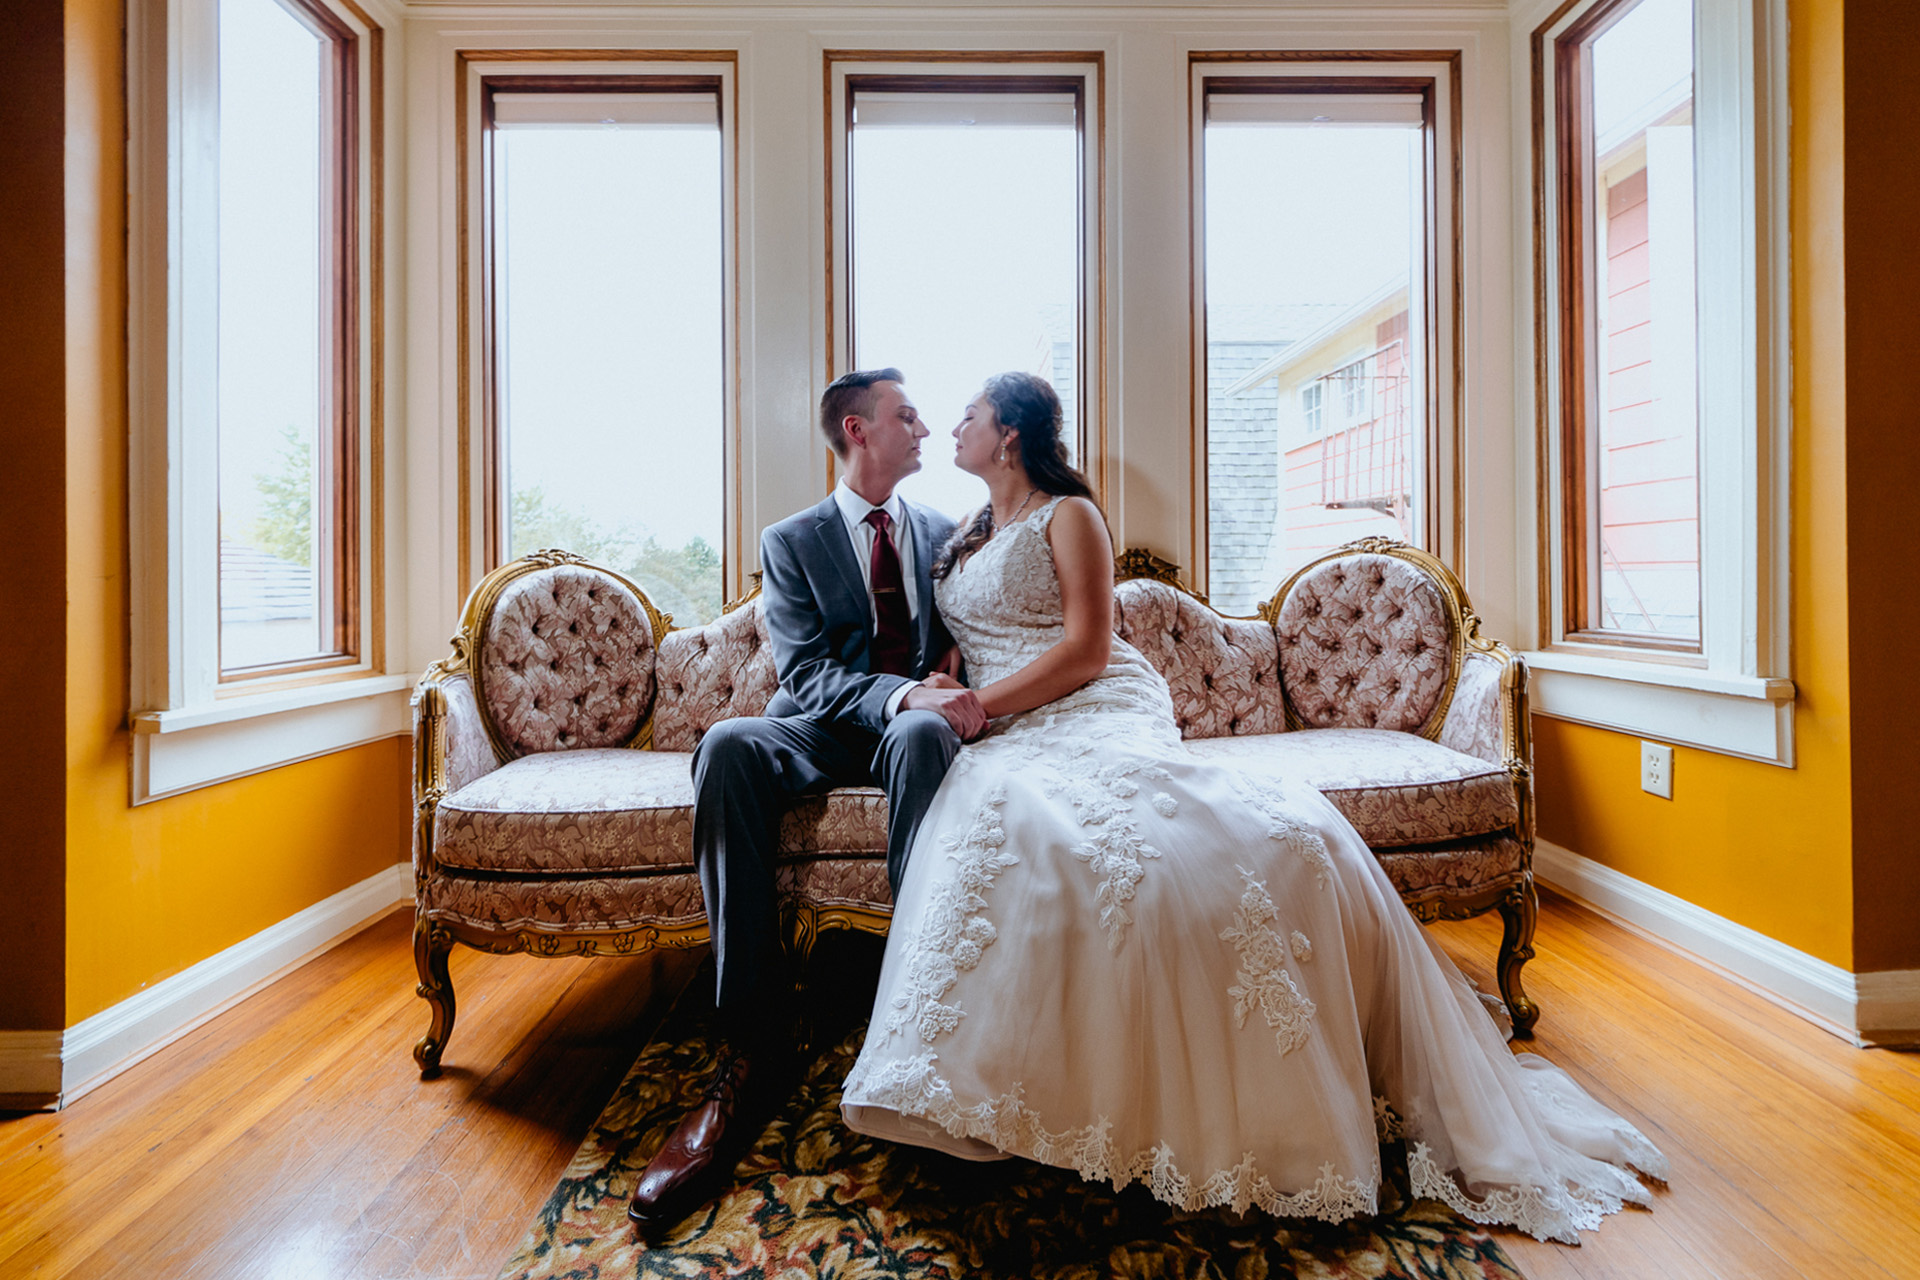 Mountain View Manor wedding photographers